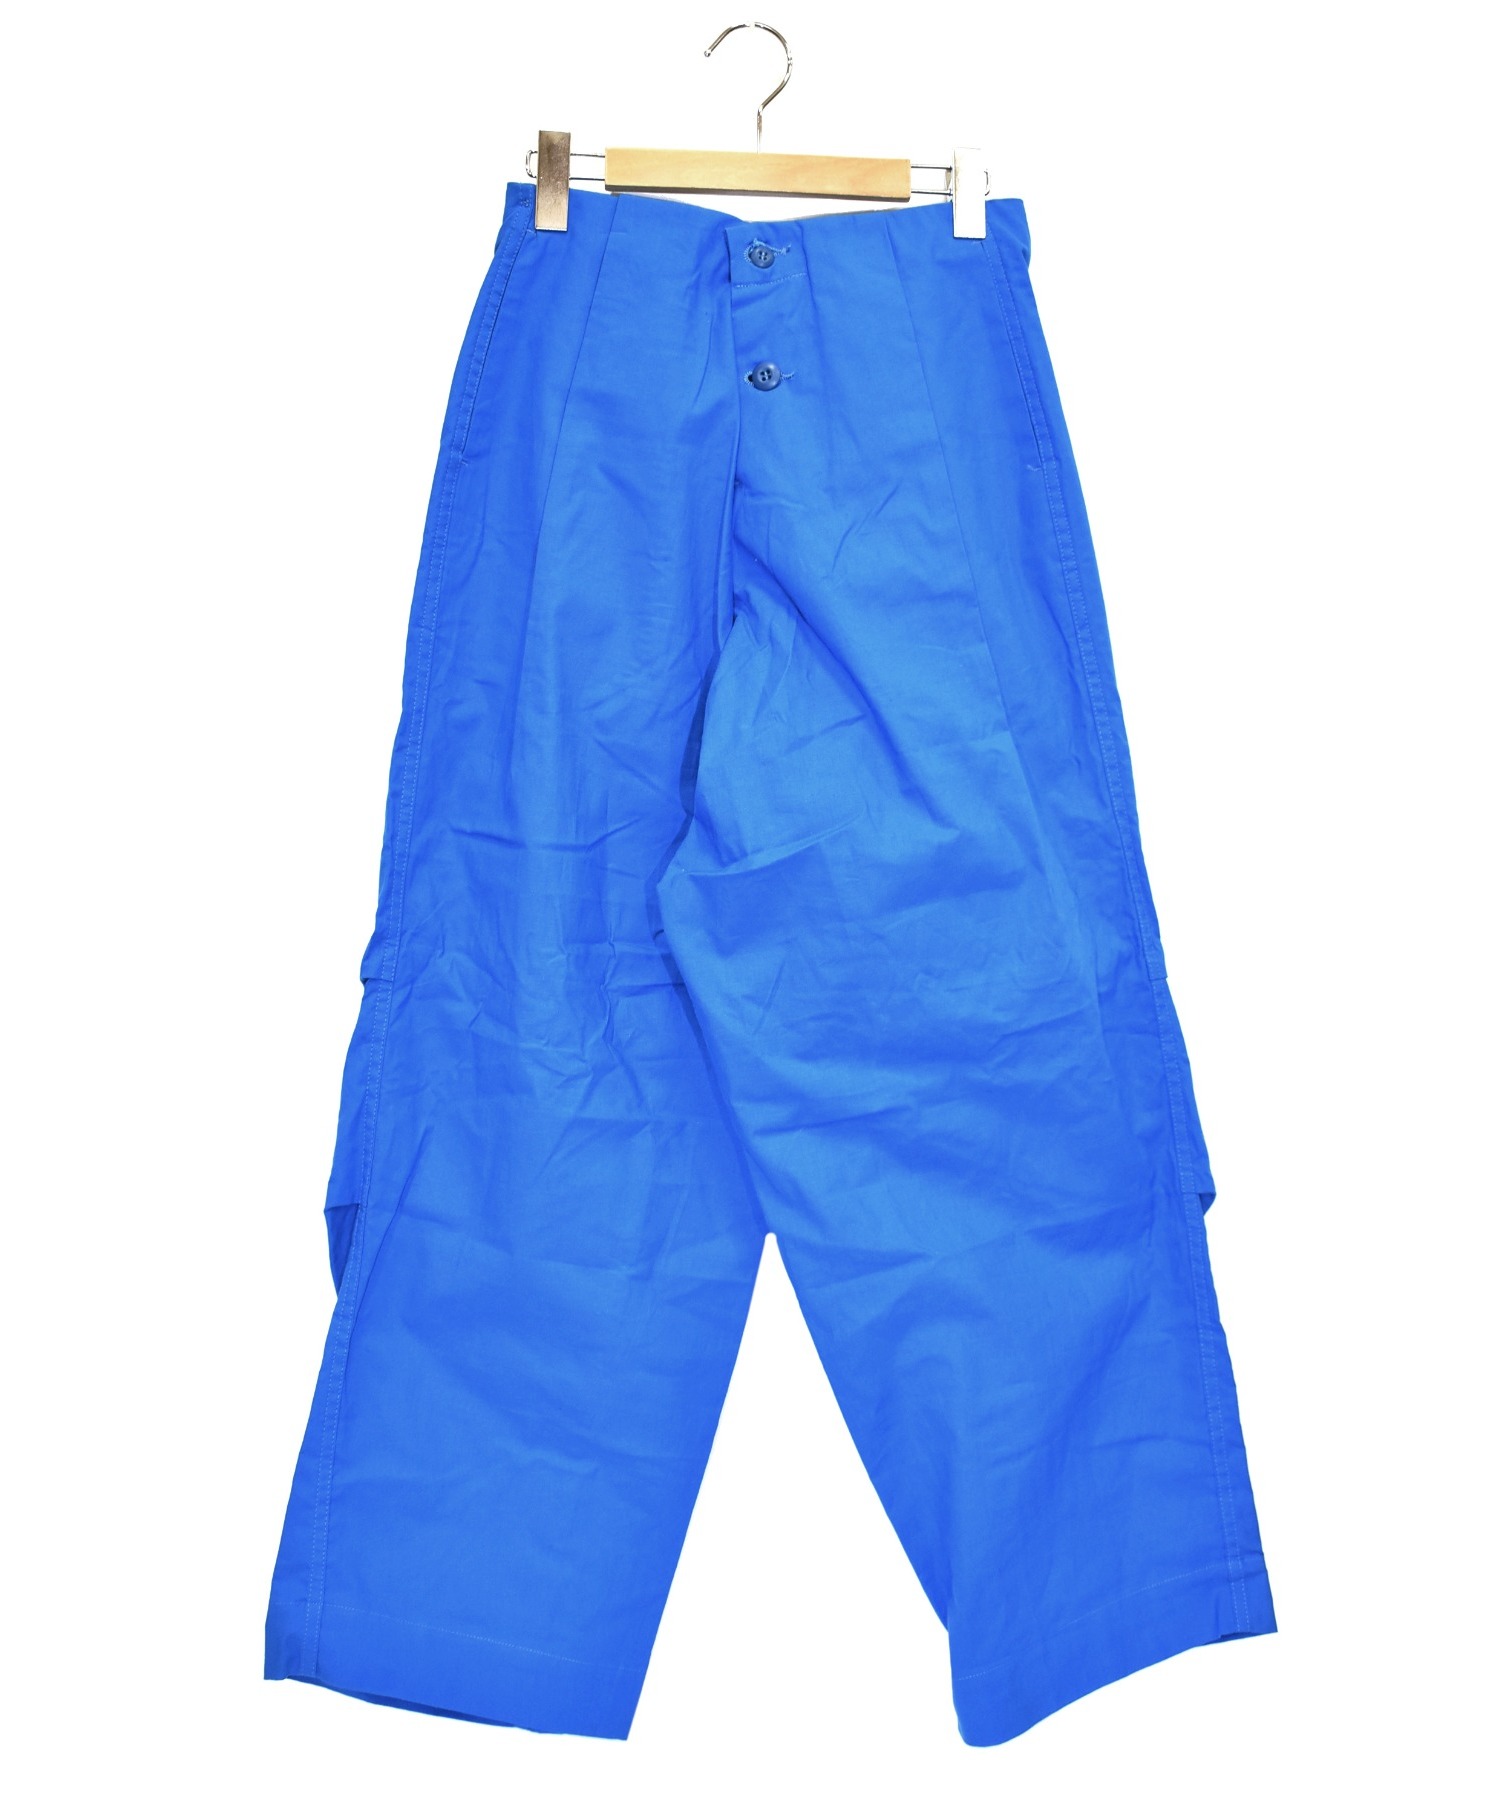 TUKI (ツキ) パジャマパンツ ブルー 0041 日本製 pajamas - sheeting